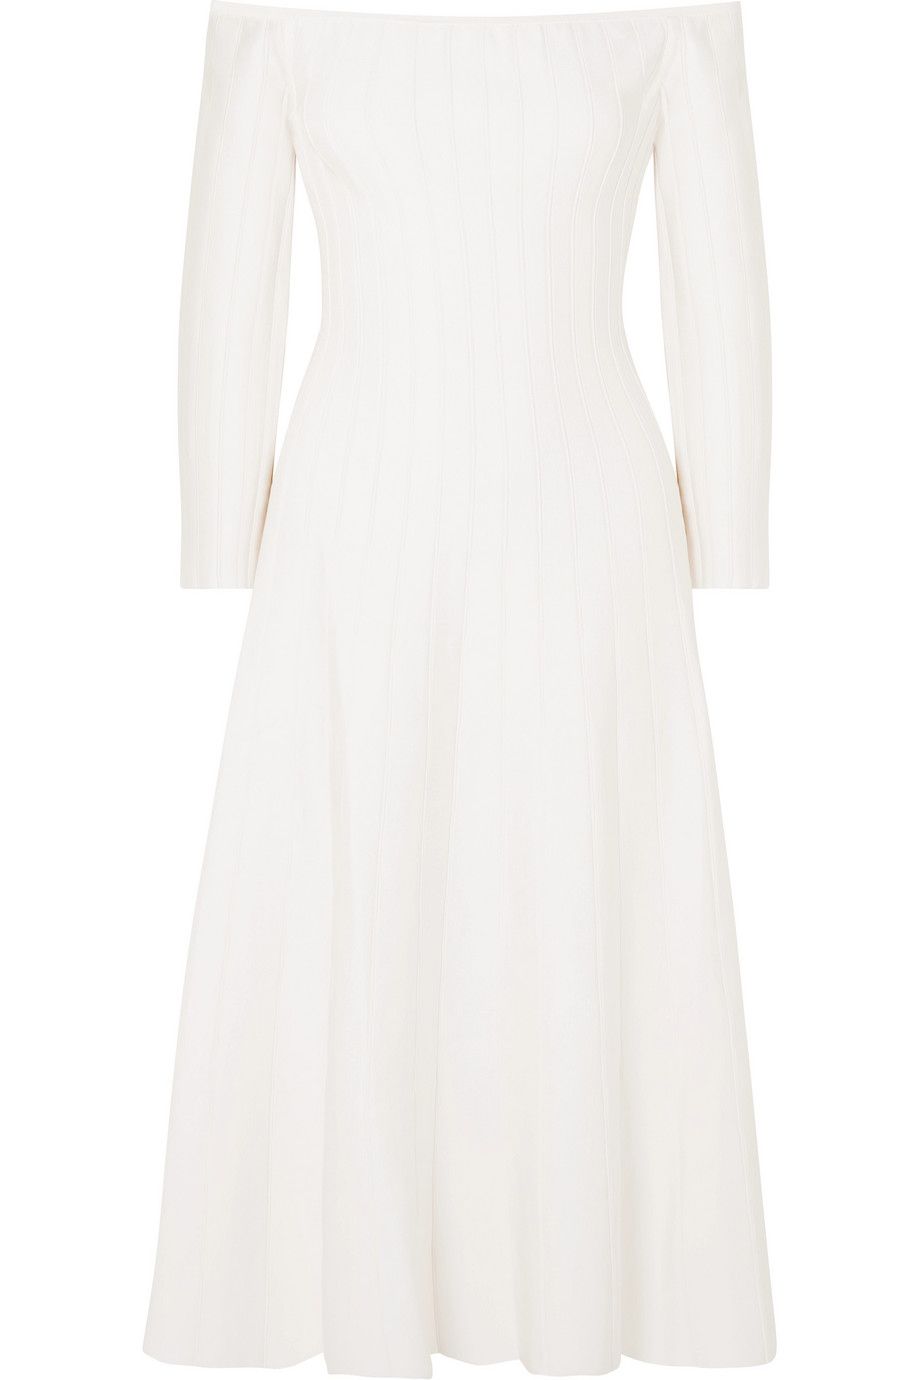 white knit one shoulder dress